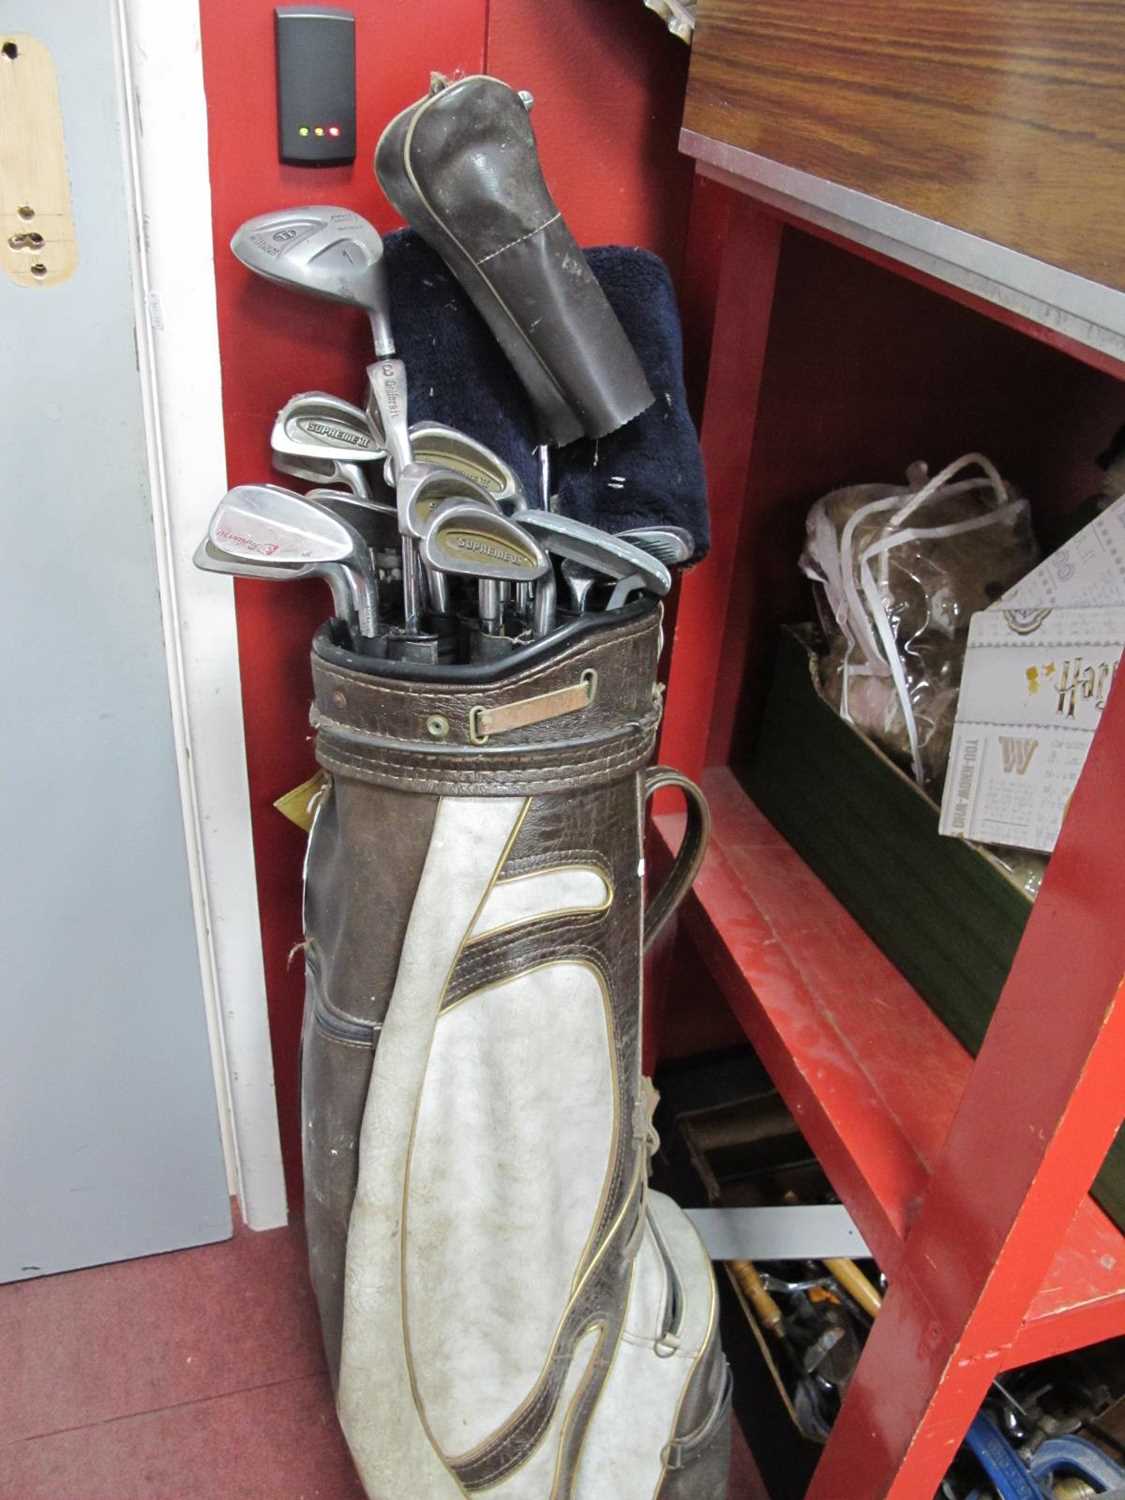 Golf Club s - Supreme Golfcraft, etc in bag, large quantity of golf balls.